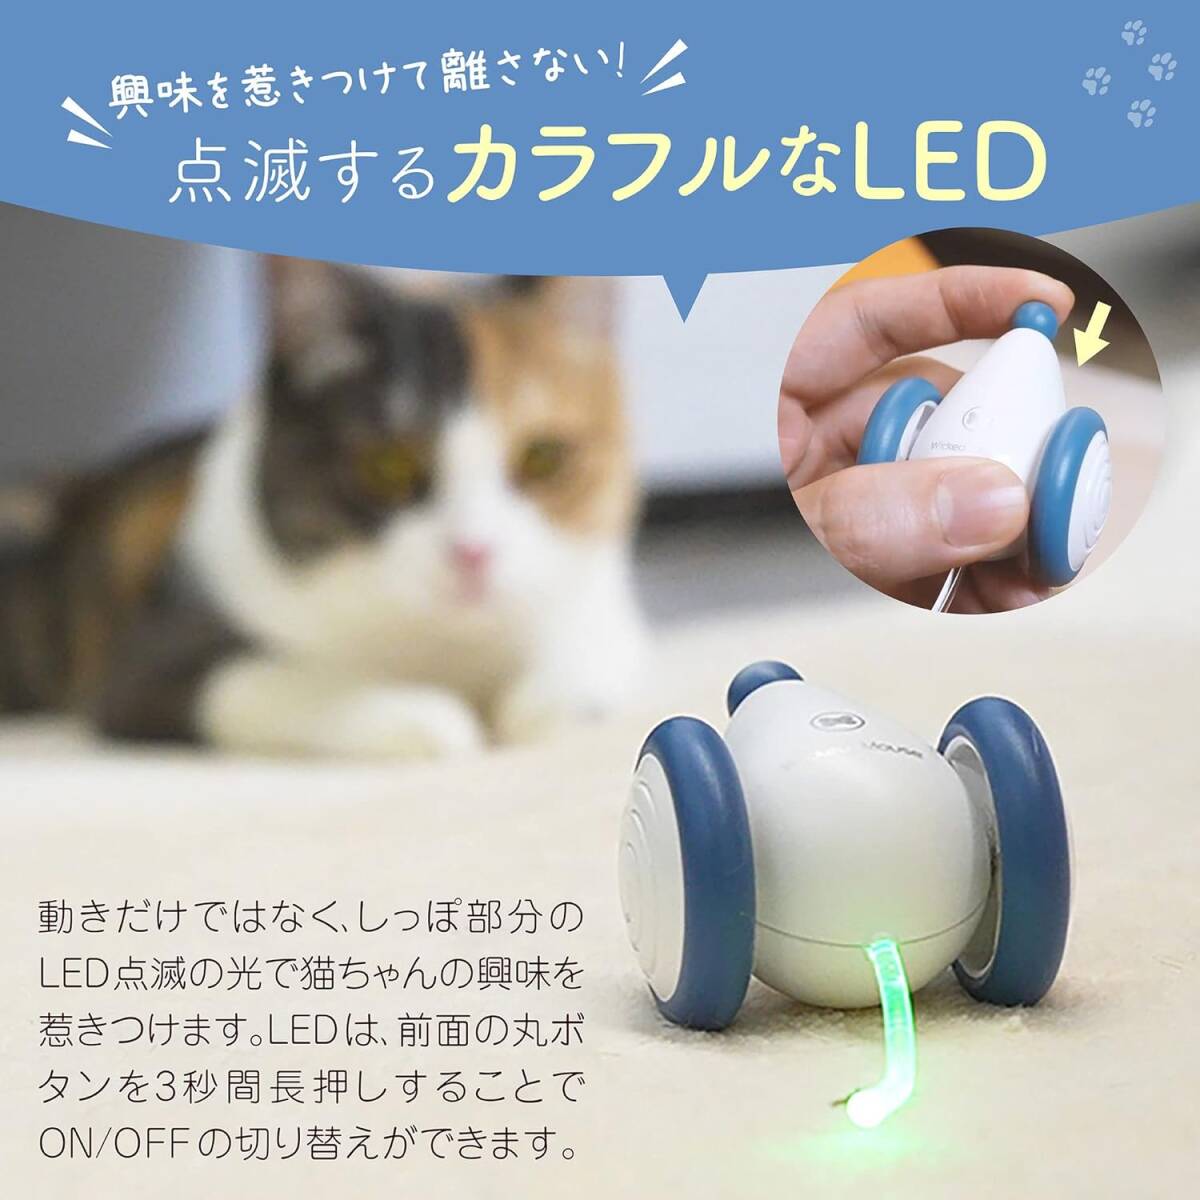 [ кошка Chan. баловство ...2024 год версия ] кошка игрушка мышь автоматика wi Kid * мышь * плюс Cheerble кошка игрушка электрический мышь автоматика 